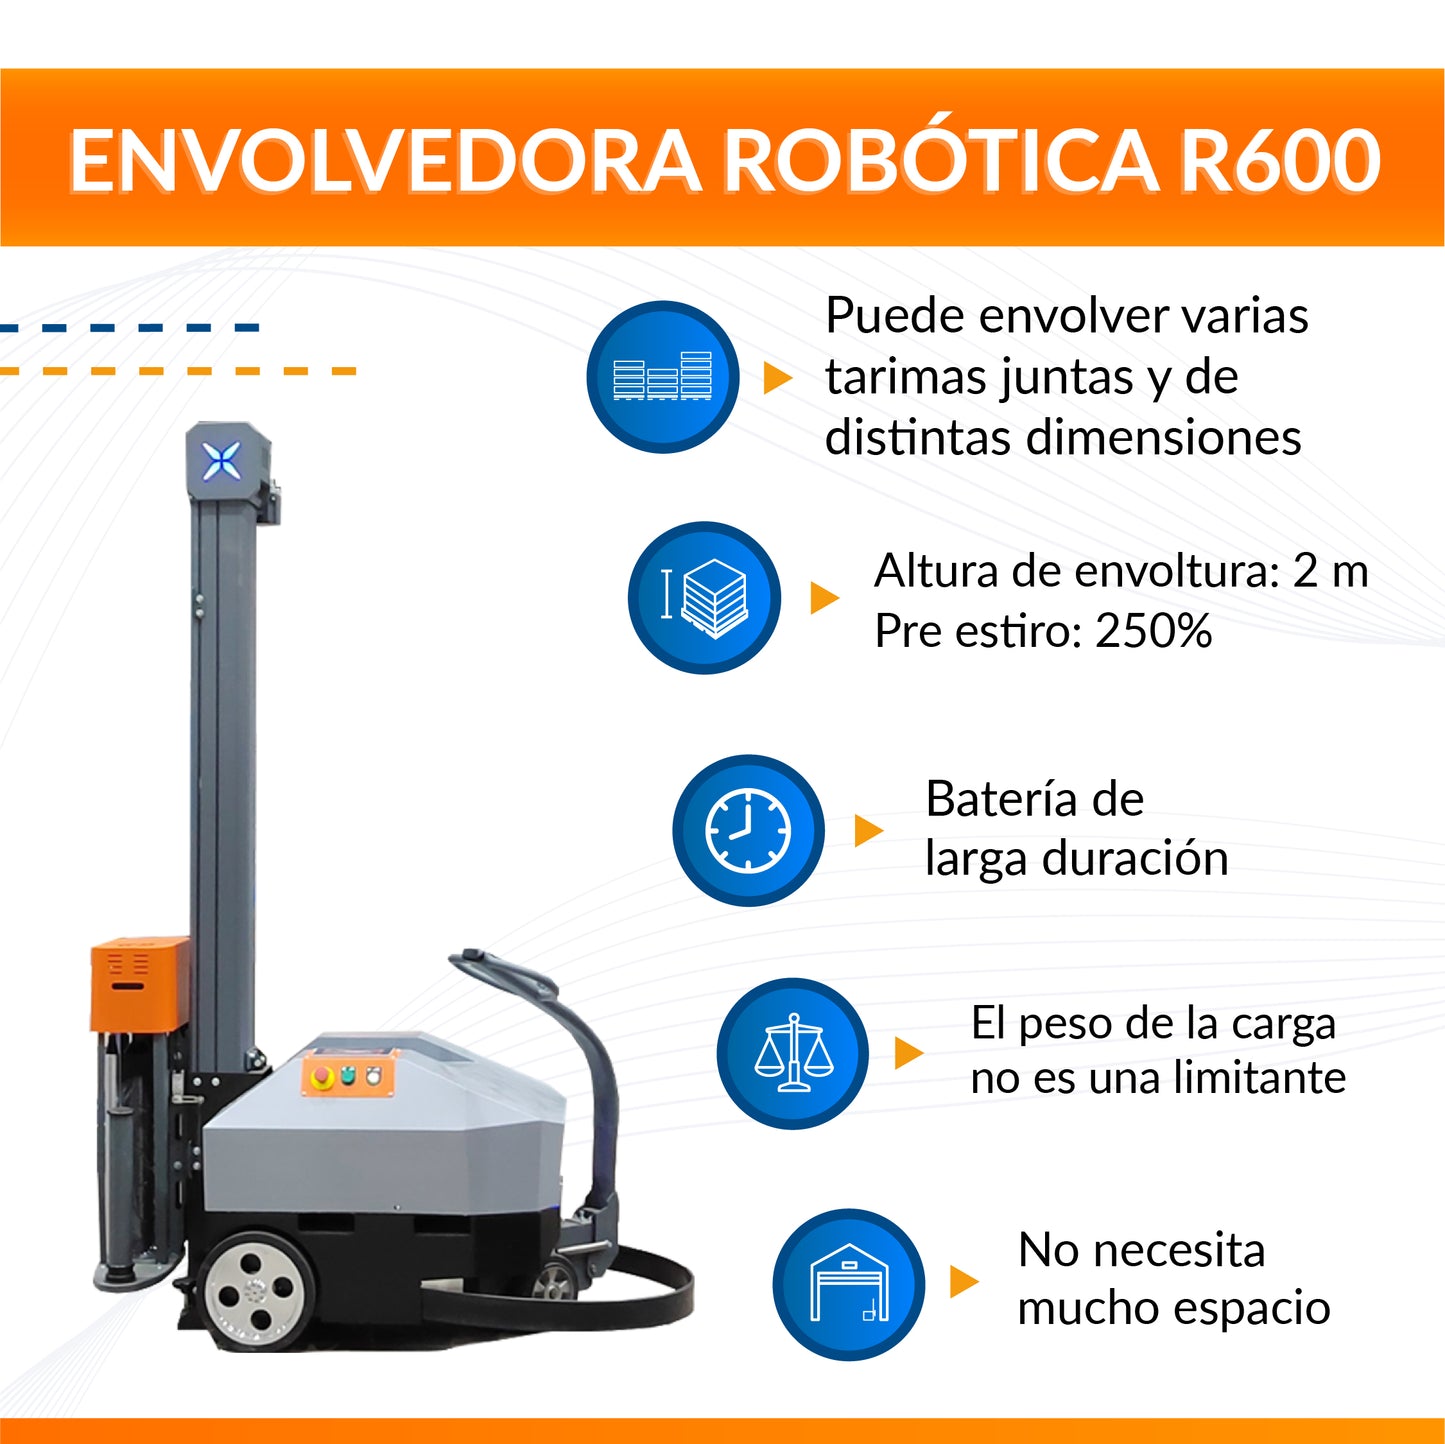 Envolvedora Robotica 600